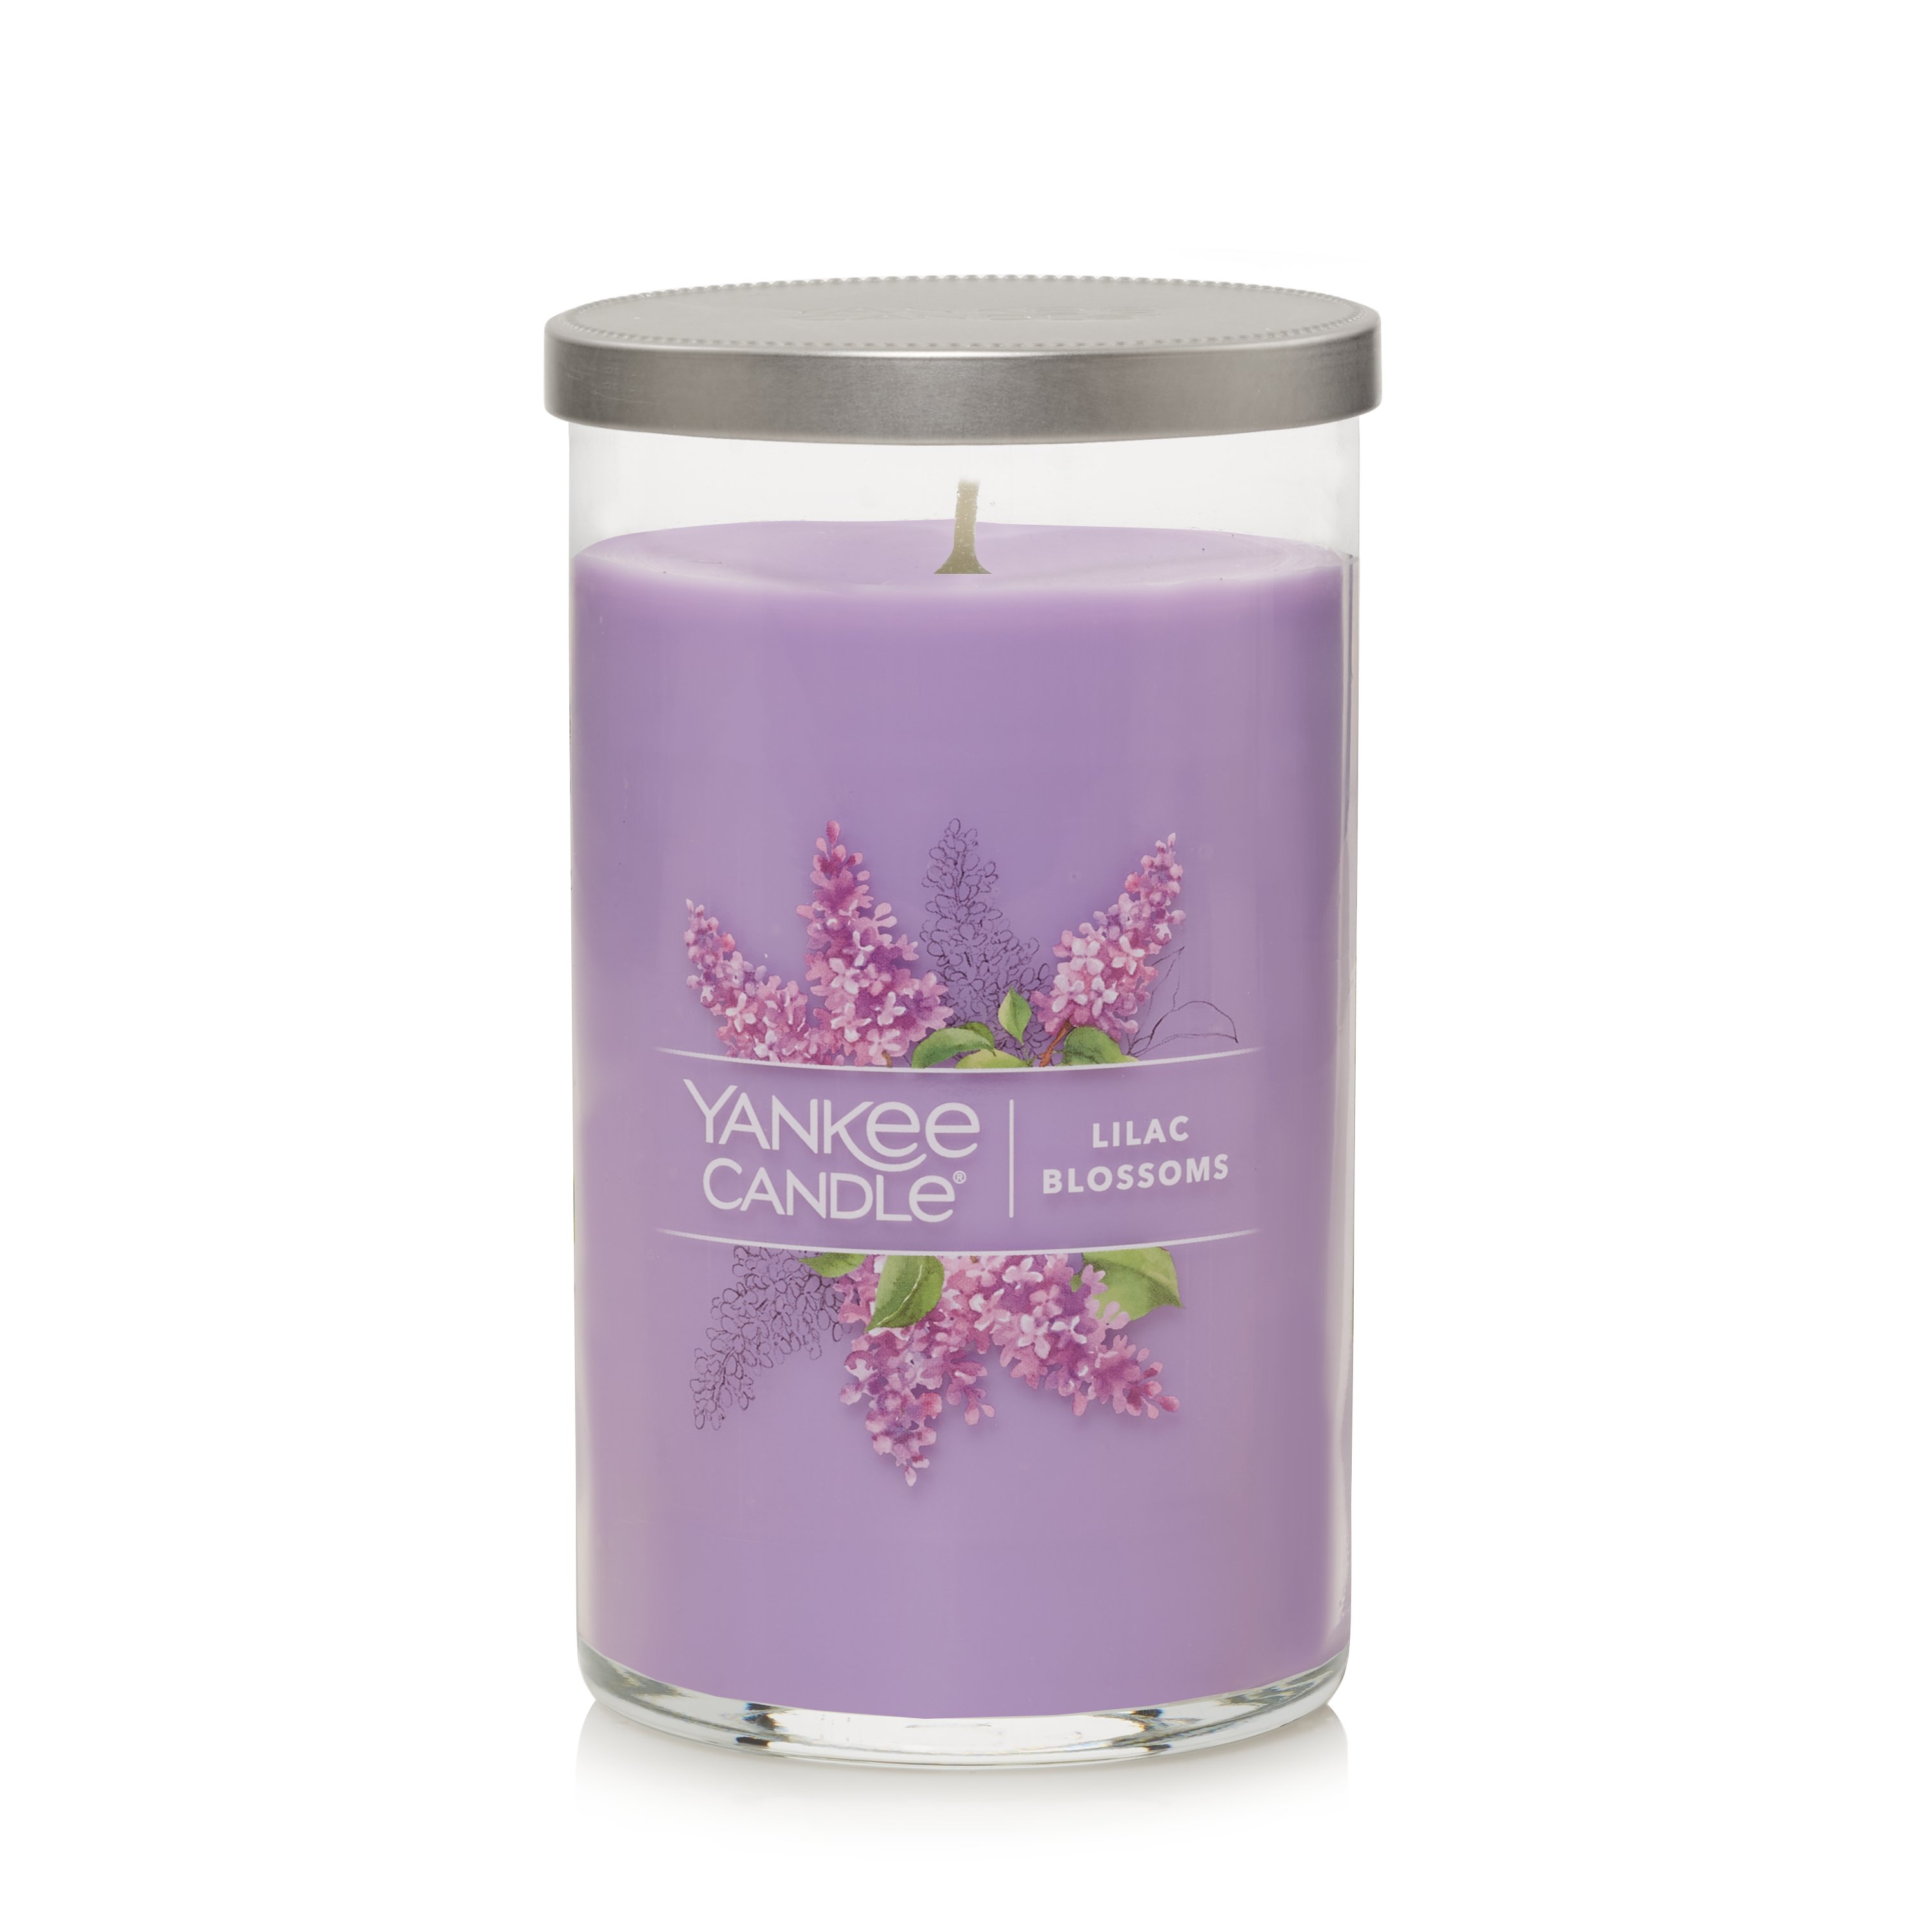 Yankee Candle Lilac Blossoms (candle/3x37g) - Set candele profumate Fiori  lilla